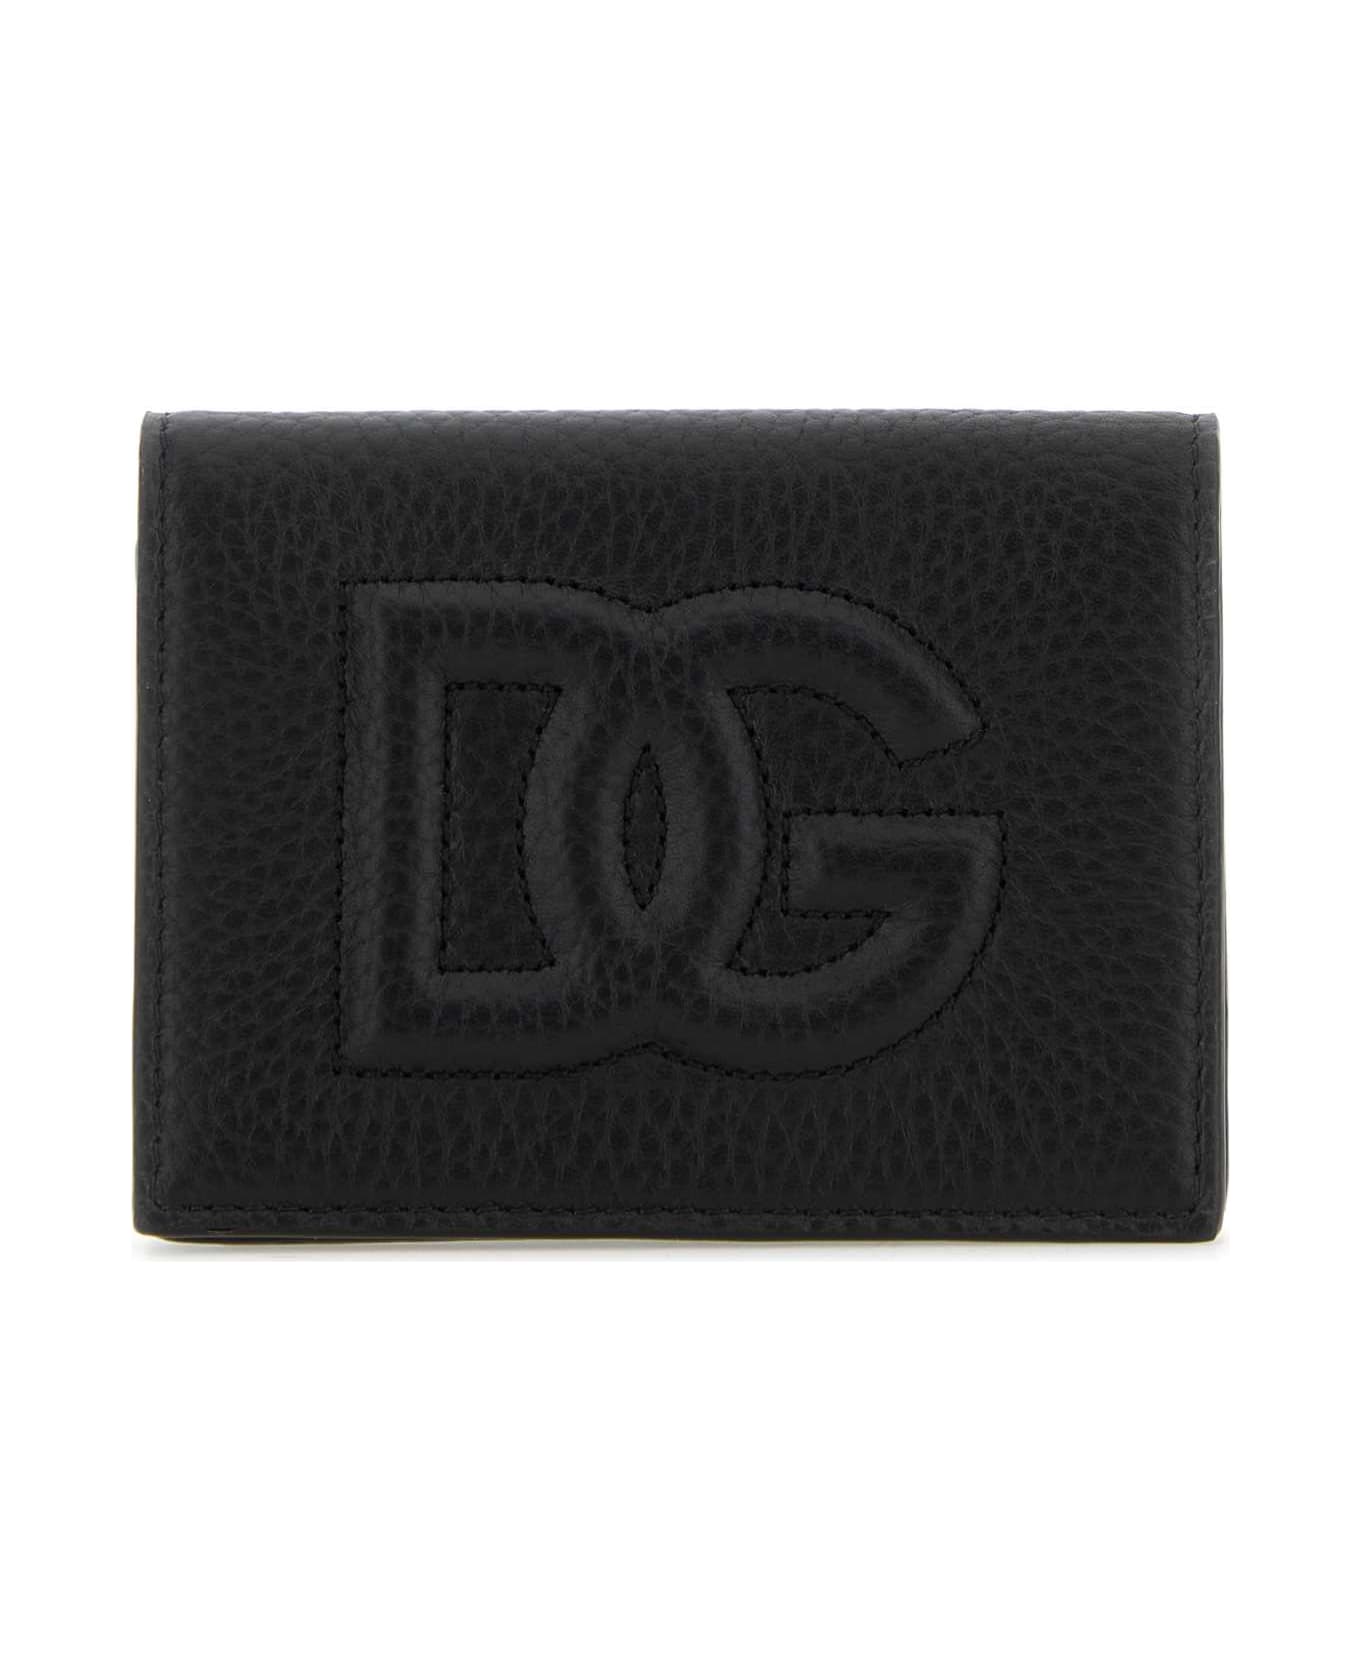 Dolce & Gabbana Black Leather Wallet - NERO 財布